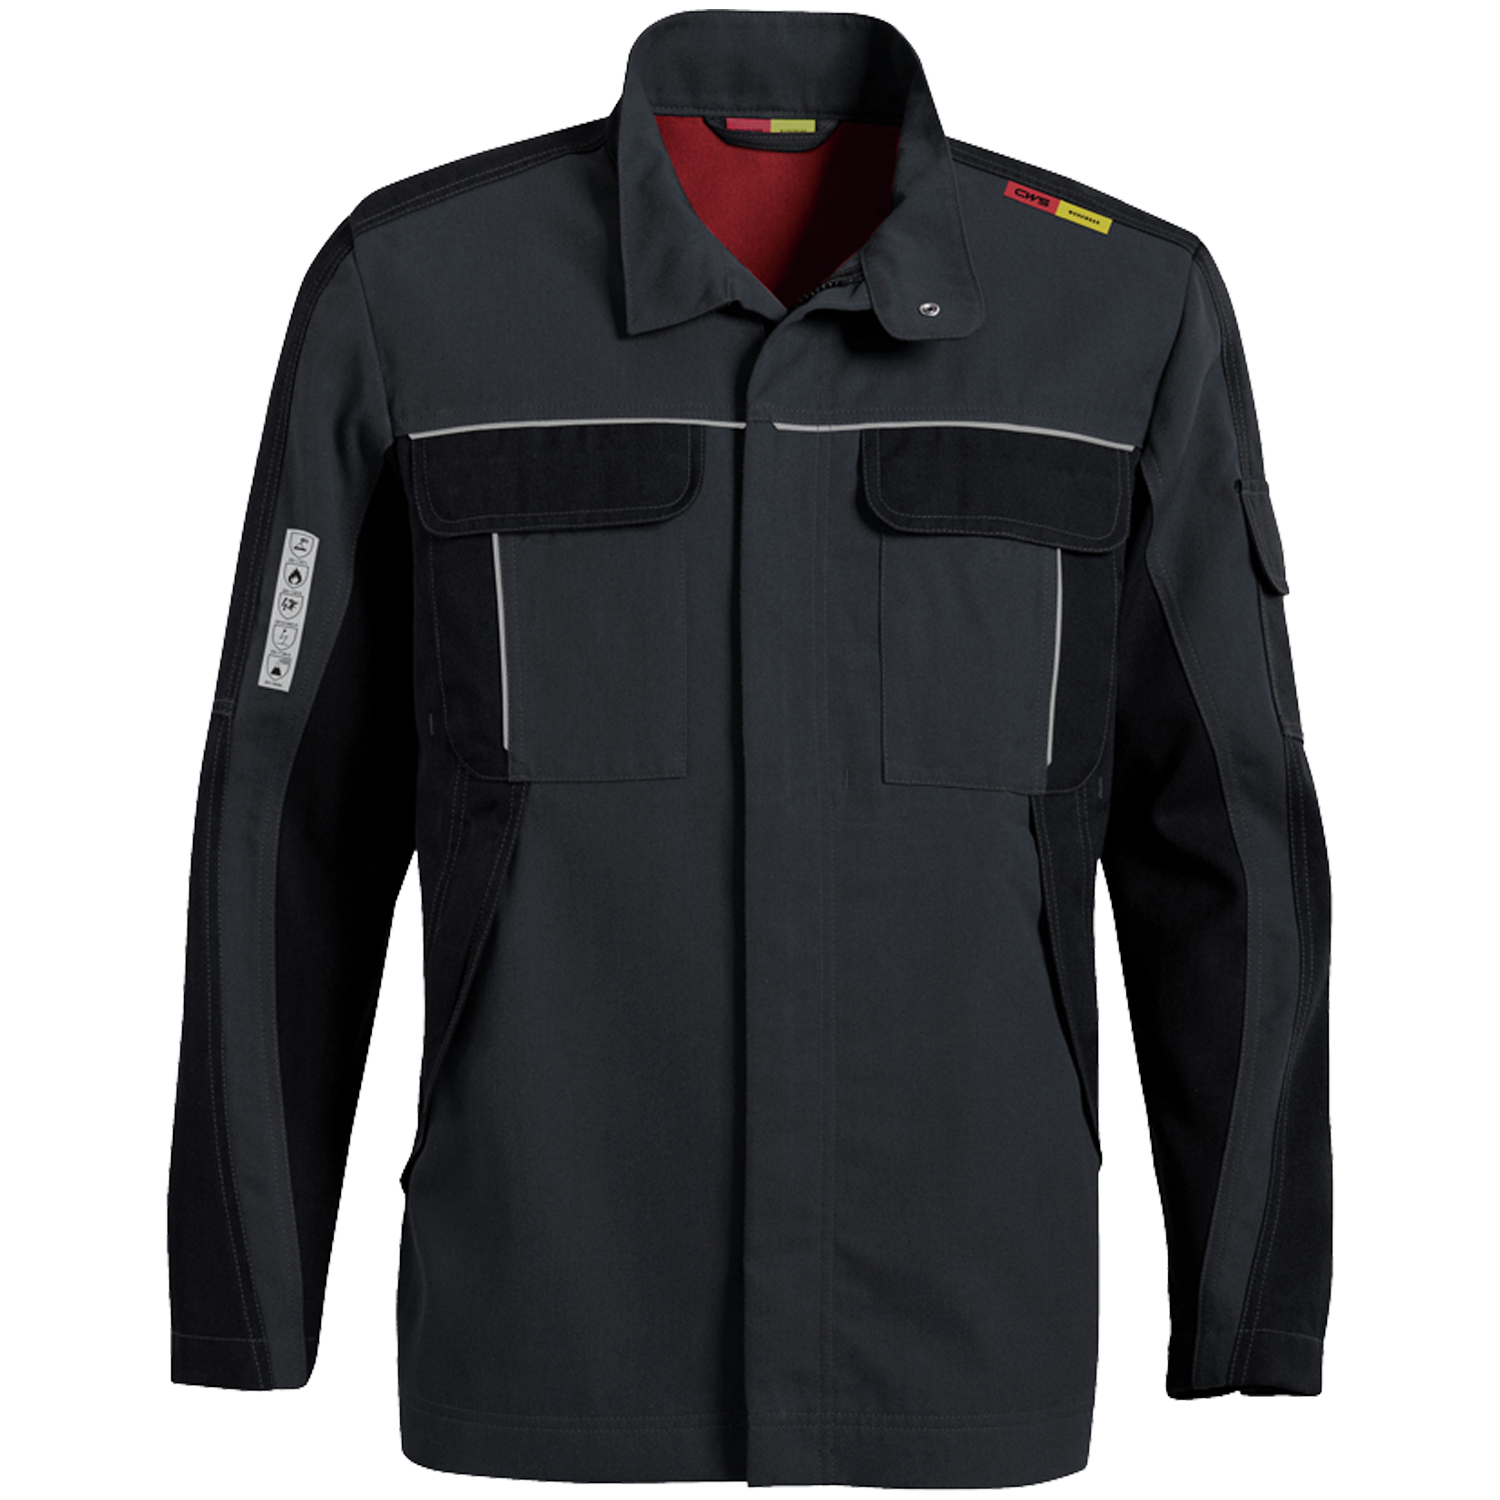 CWS Profi Line Protection Work Jacket Grey/DarkGrey